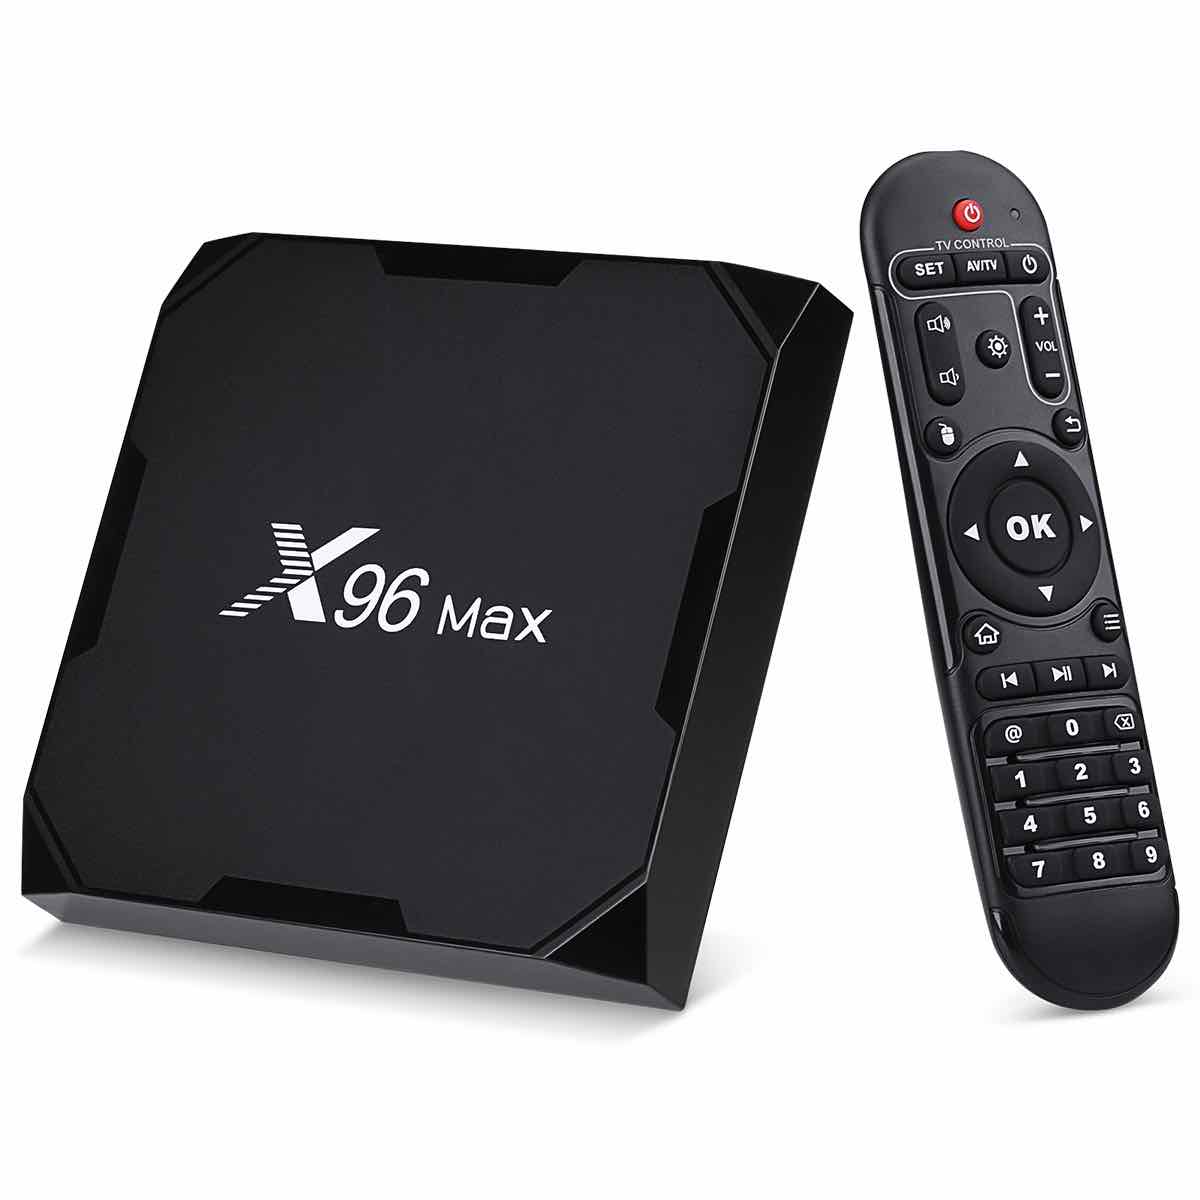 Тв приставки рейтинг лучших. Smart TV Box x96 Max. Смарт приставка x96 Max Plus. Смарт приставка x96max+4/32gb. Android приставка x96 Max.